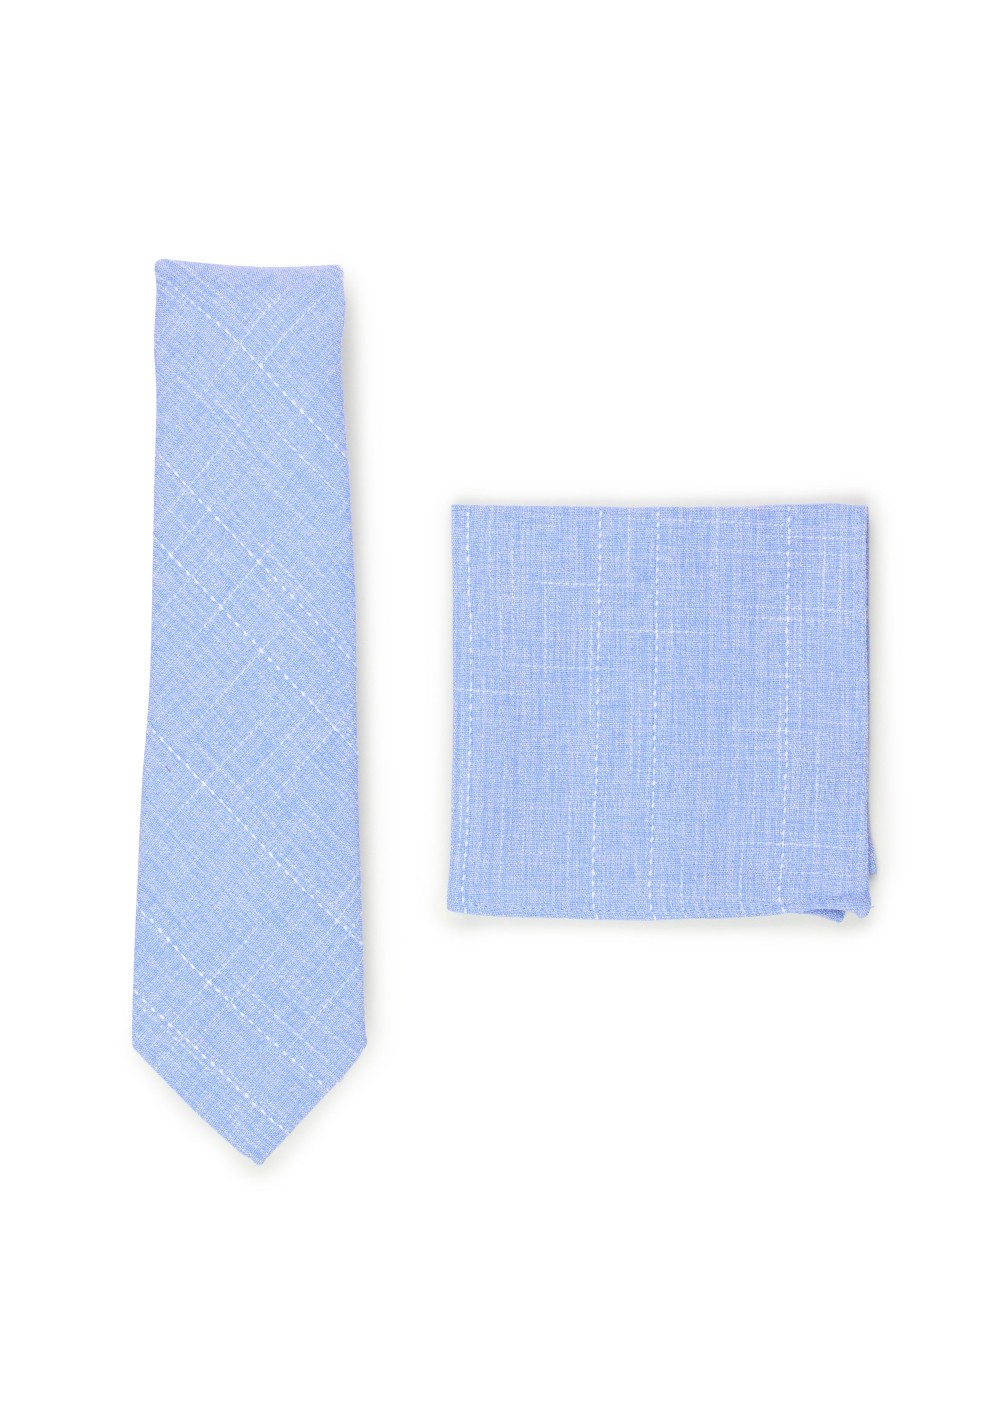 Mens Solid Linen Tie Set Slim Necktie with Matching Pocket Square 